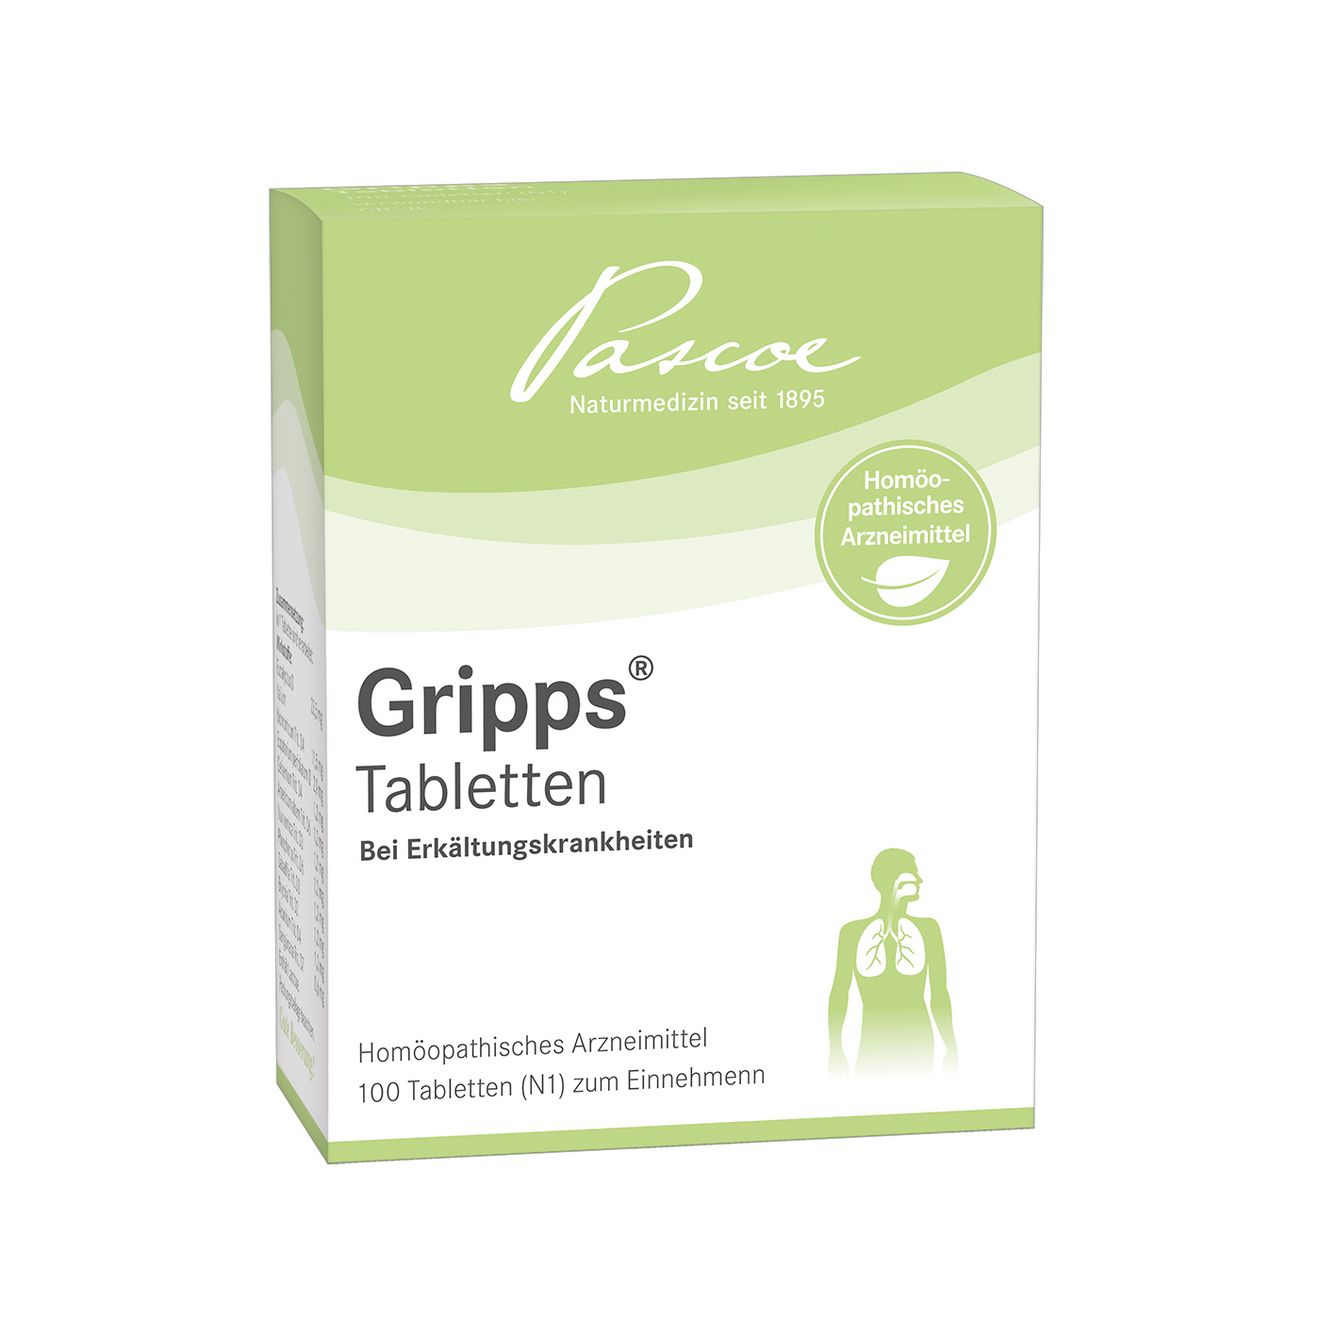 Gripps 100 Packshot PZN 07606912